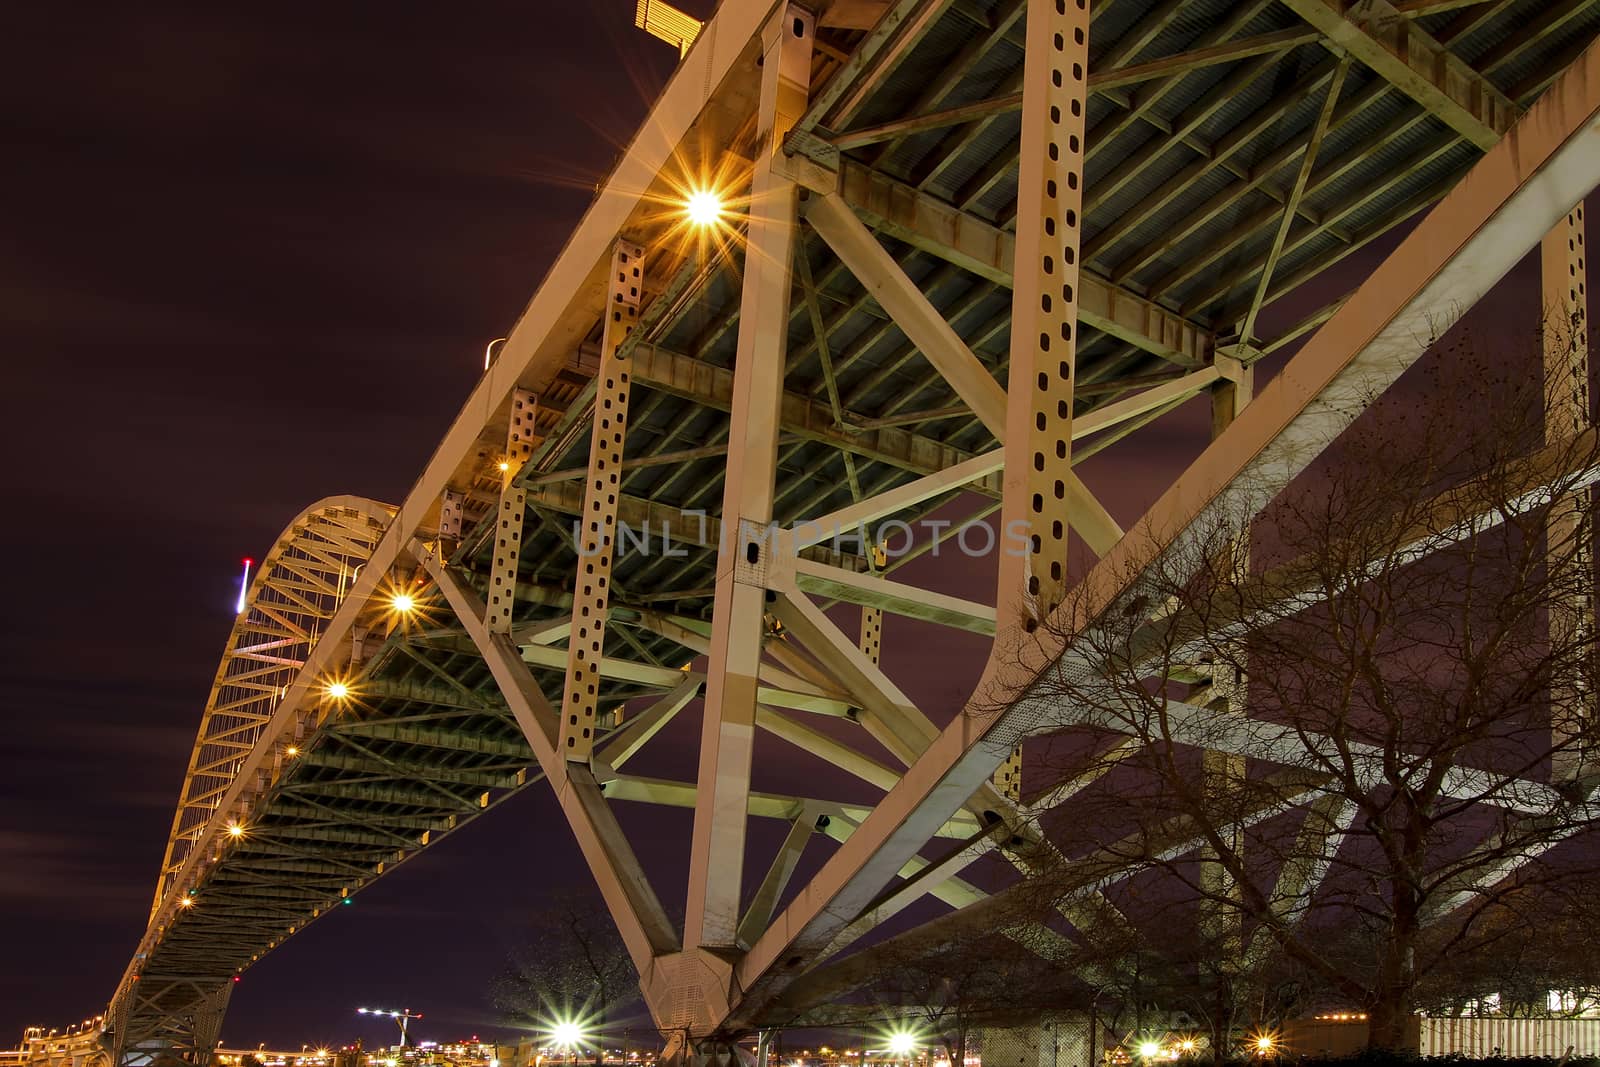 Under the Fremont Bridge at Night by Davidgn